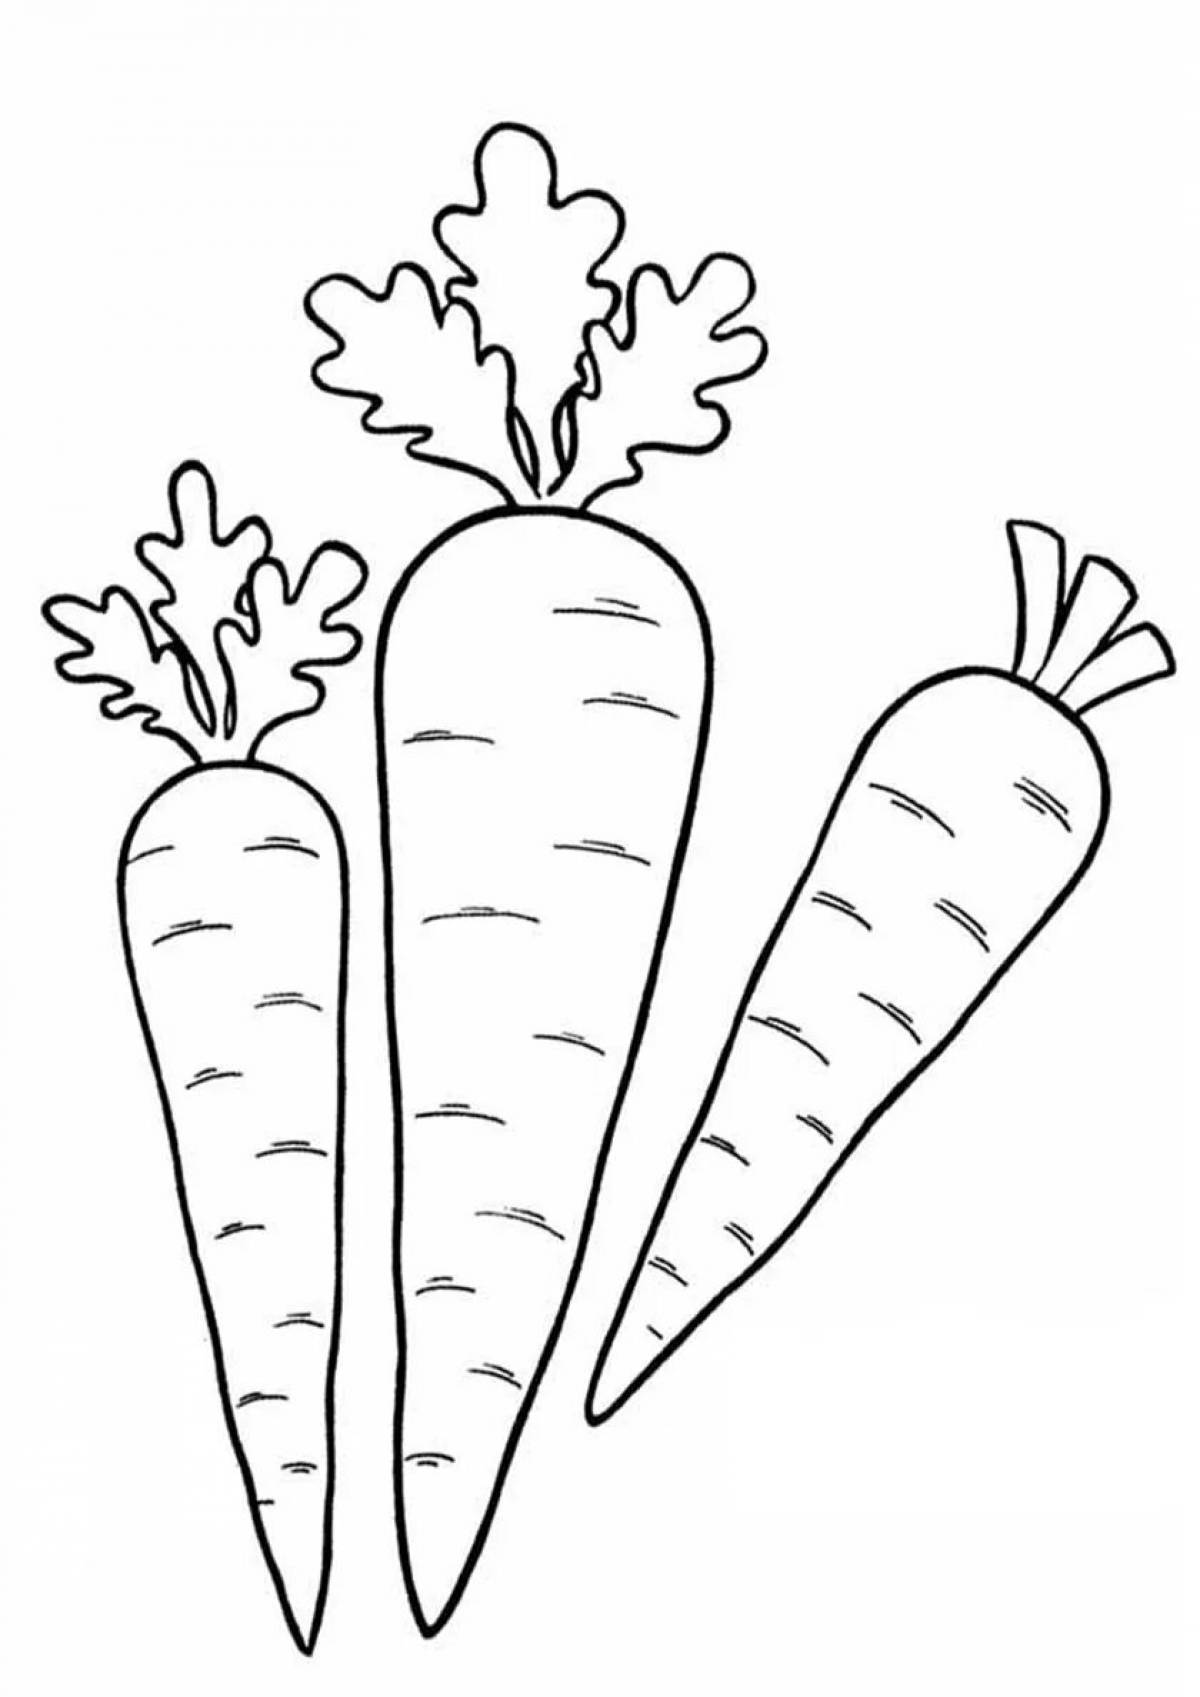 Carrot pattern #4